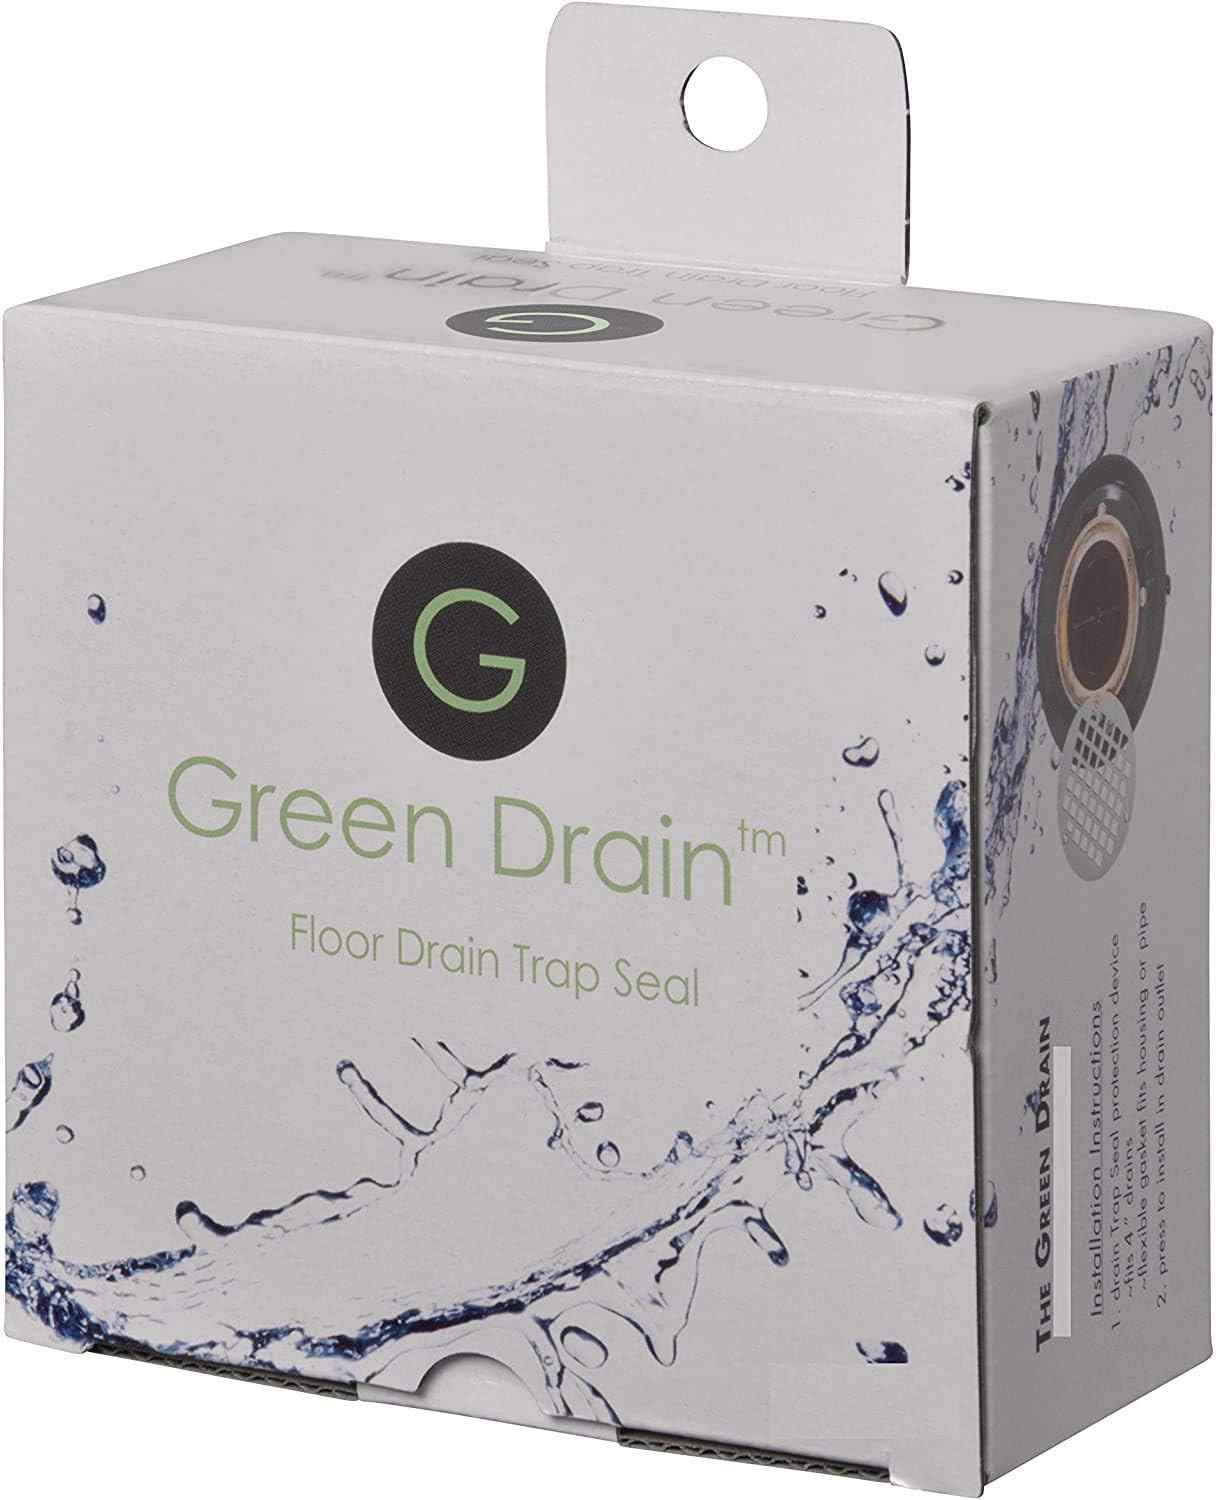 3" Waterless Drain Trap Seal - Green Drain